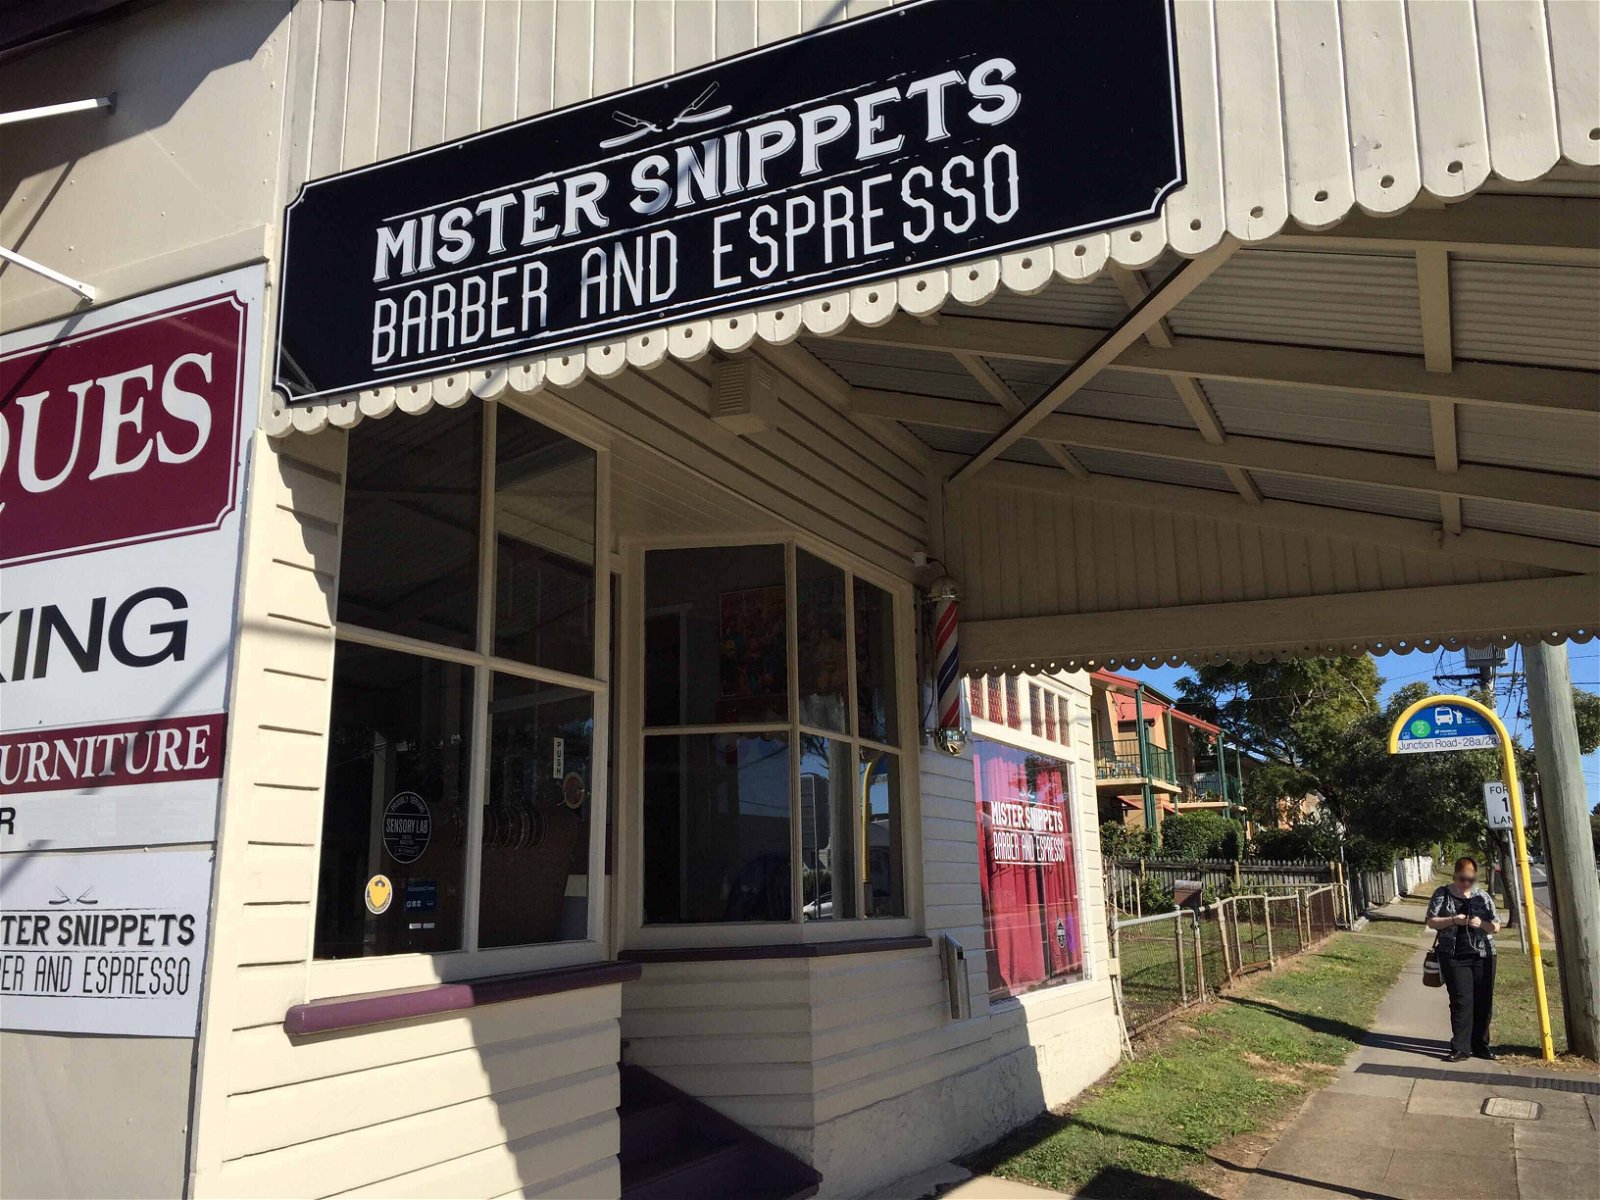 Mister Snippets Barber & Espresso - Accommodation Find 0